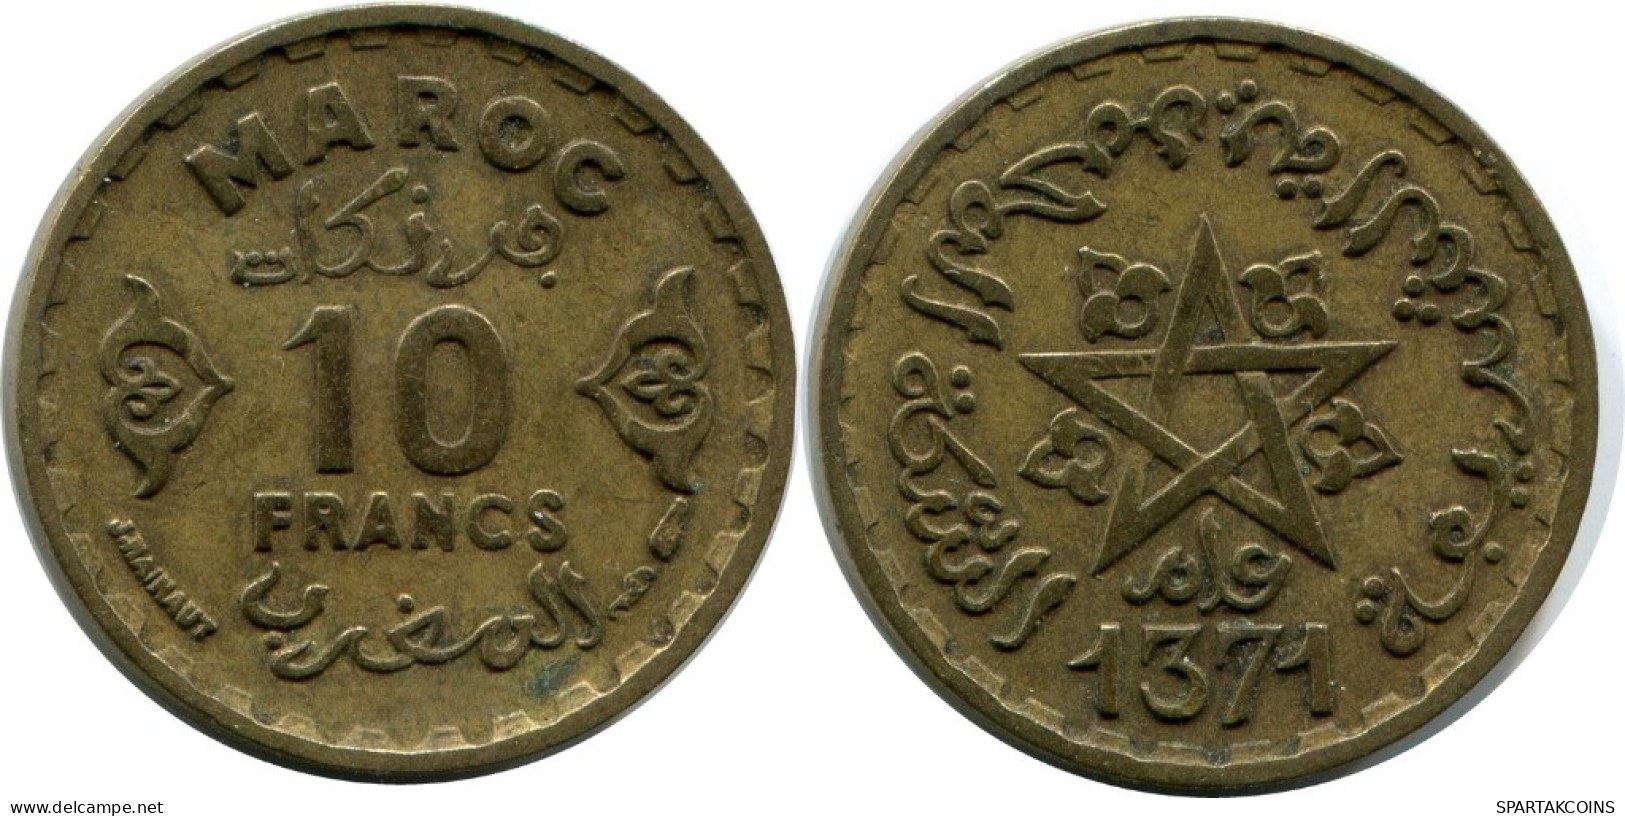 10 FRANCS 1951 MOROCCO Islamic Coin #AH677.3.U.A - Marokko